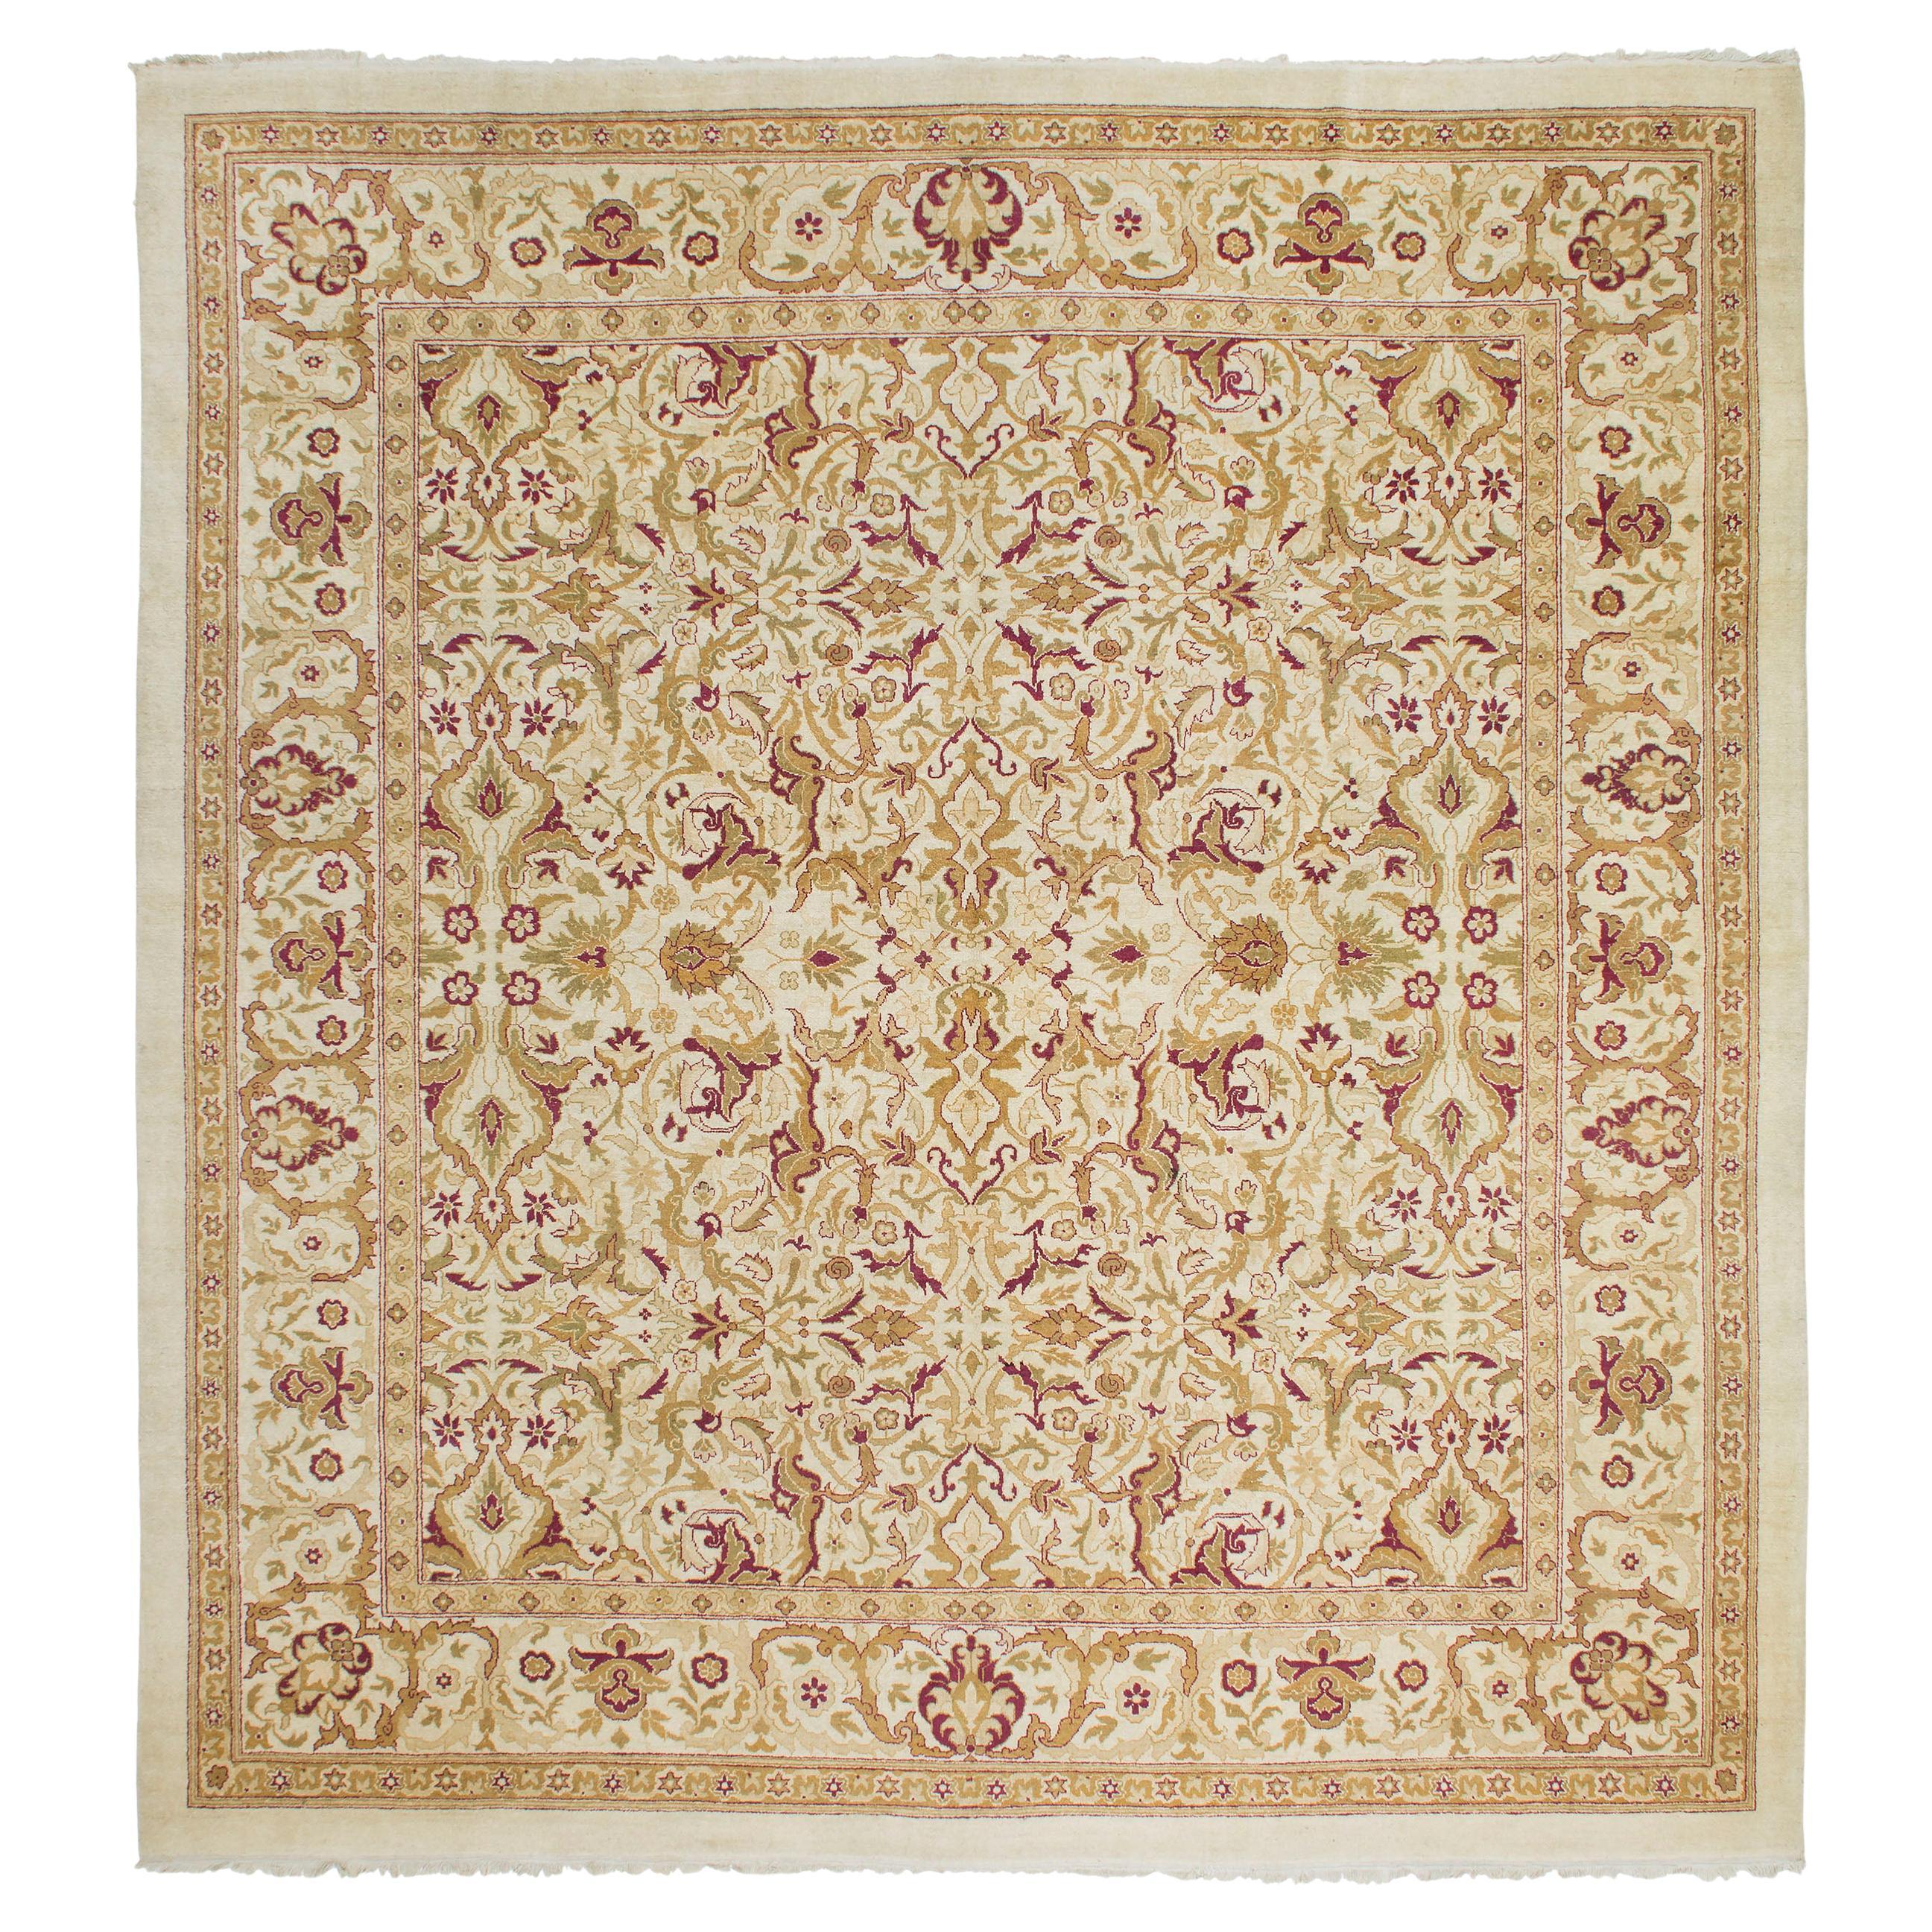 Antiker Amritsar-Teppich